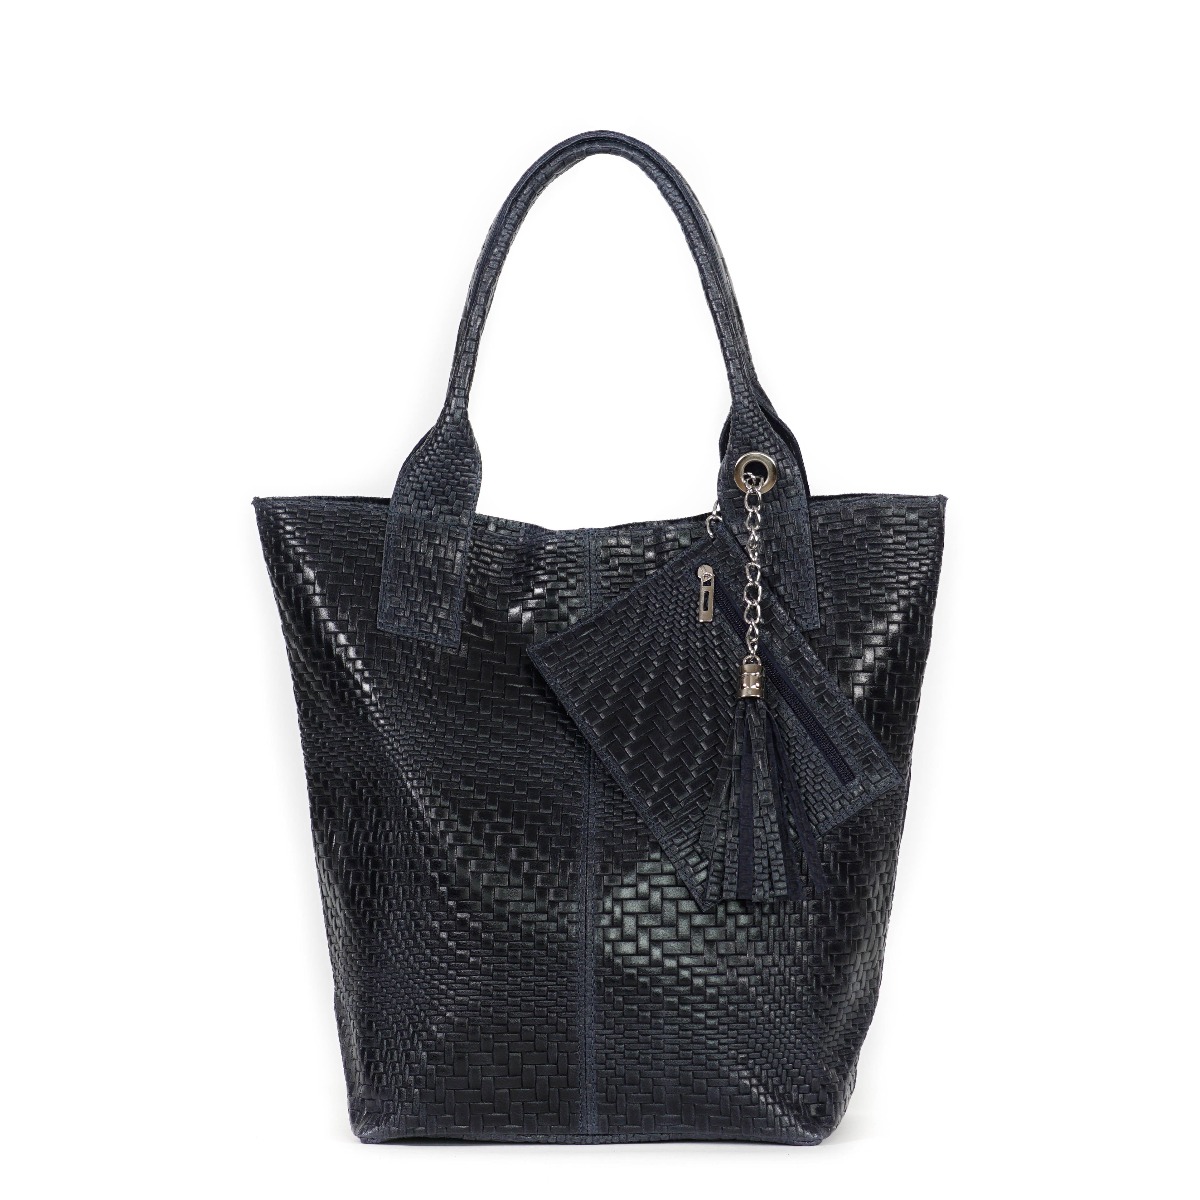 Dark blue women's genuine leather tote bag